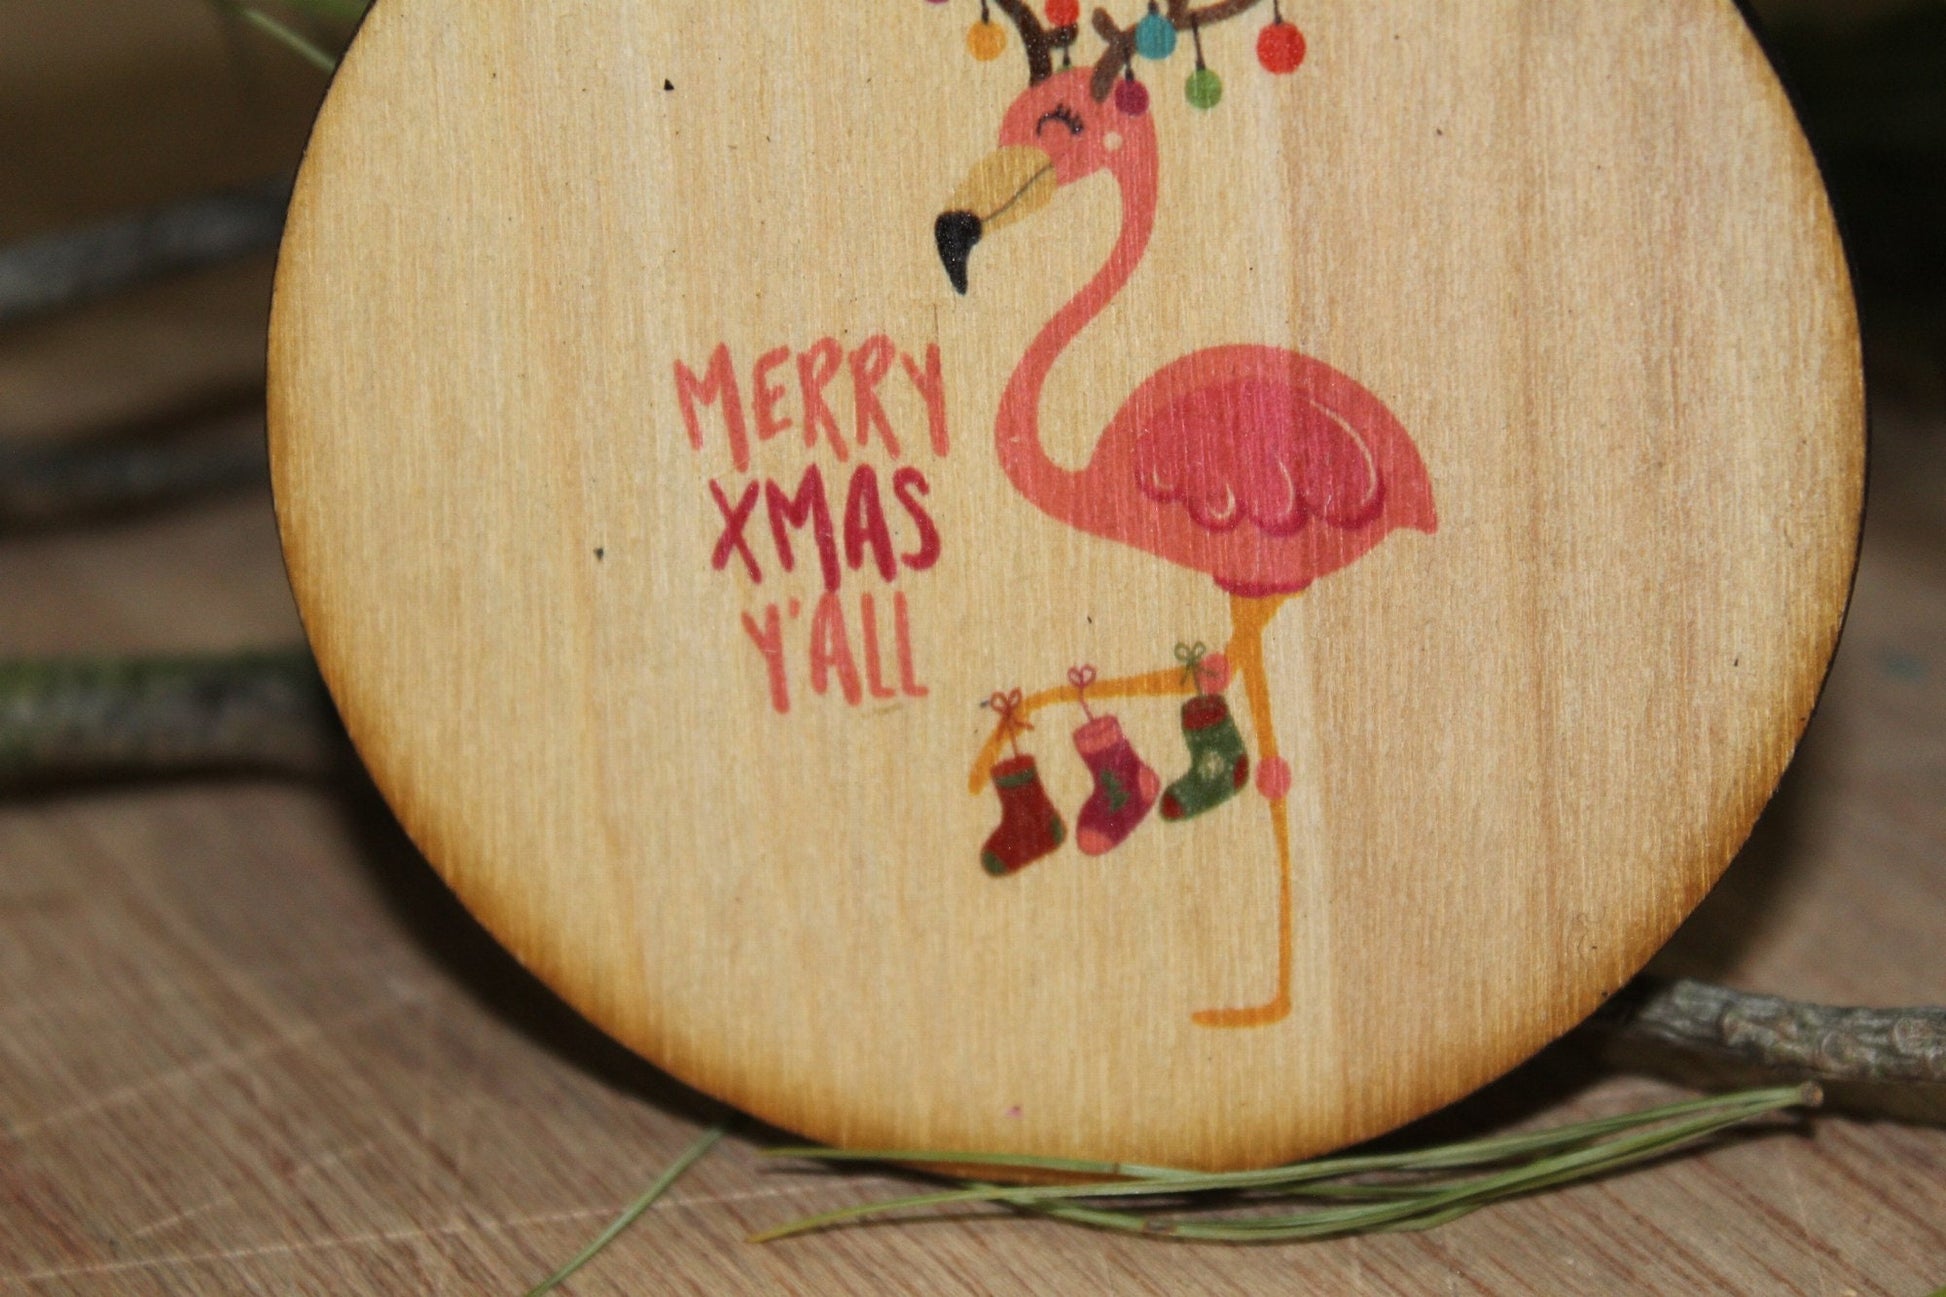 Christmas Flamingo Ornament Merry Xmas Yall Wood Slice Tangled in Christmas Lights Christmas Tree Primitive Rustic Tree Printed Beach Sea